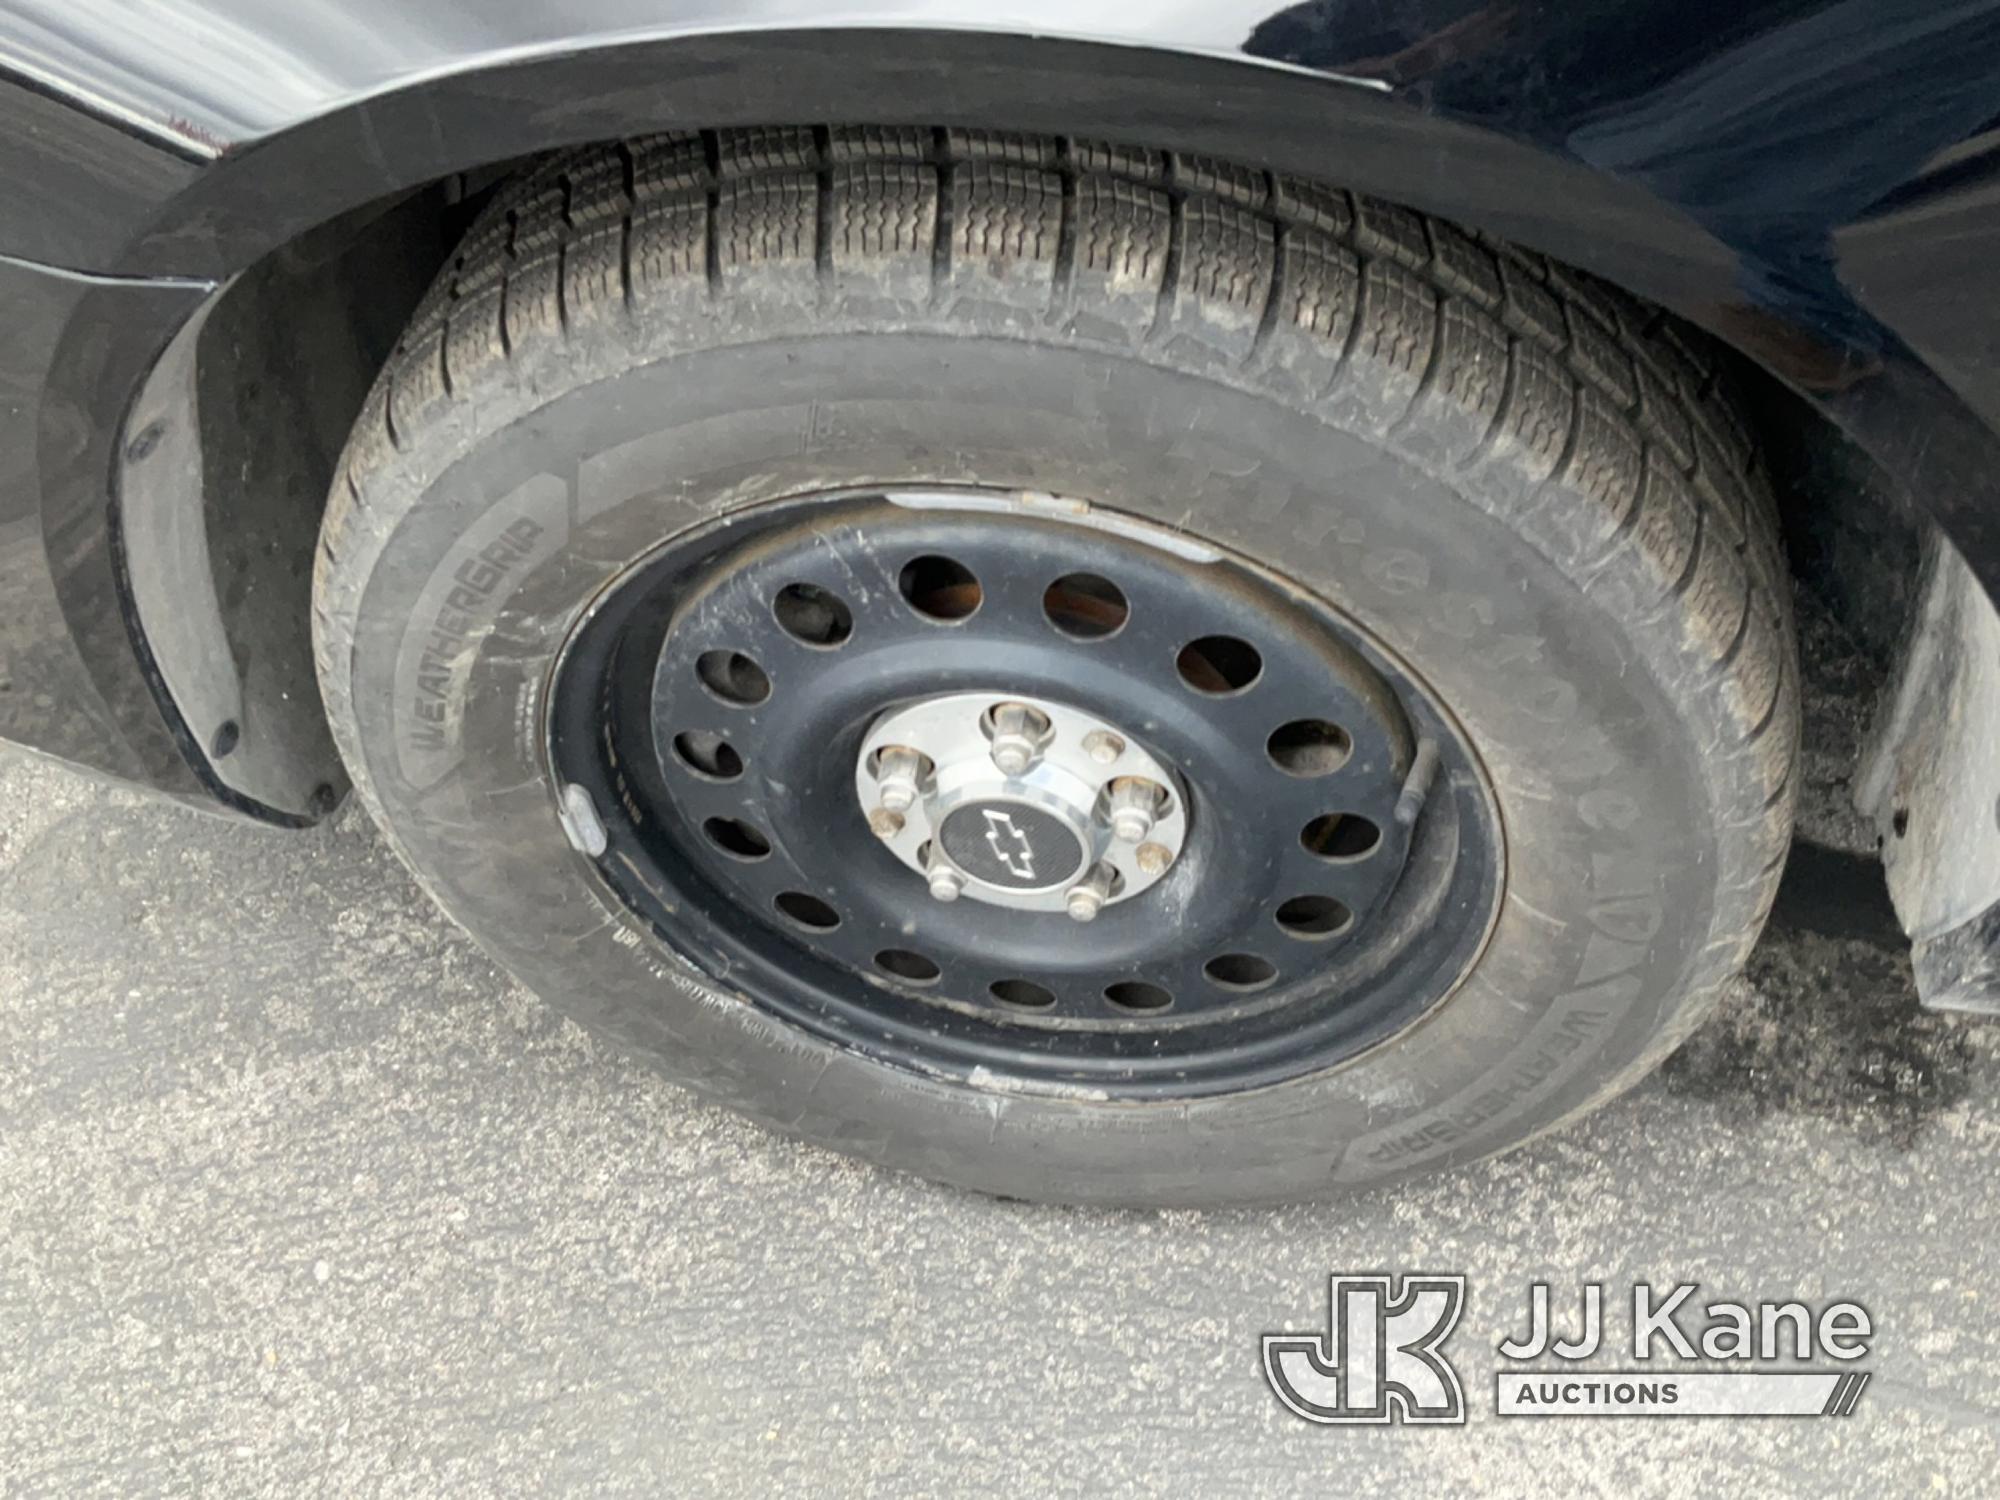 (Salt Lake City, UT) 2010 Chevrolet Impala 4-Door Sedan Bad Head Gasket, Condition Unknown, Airbag L